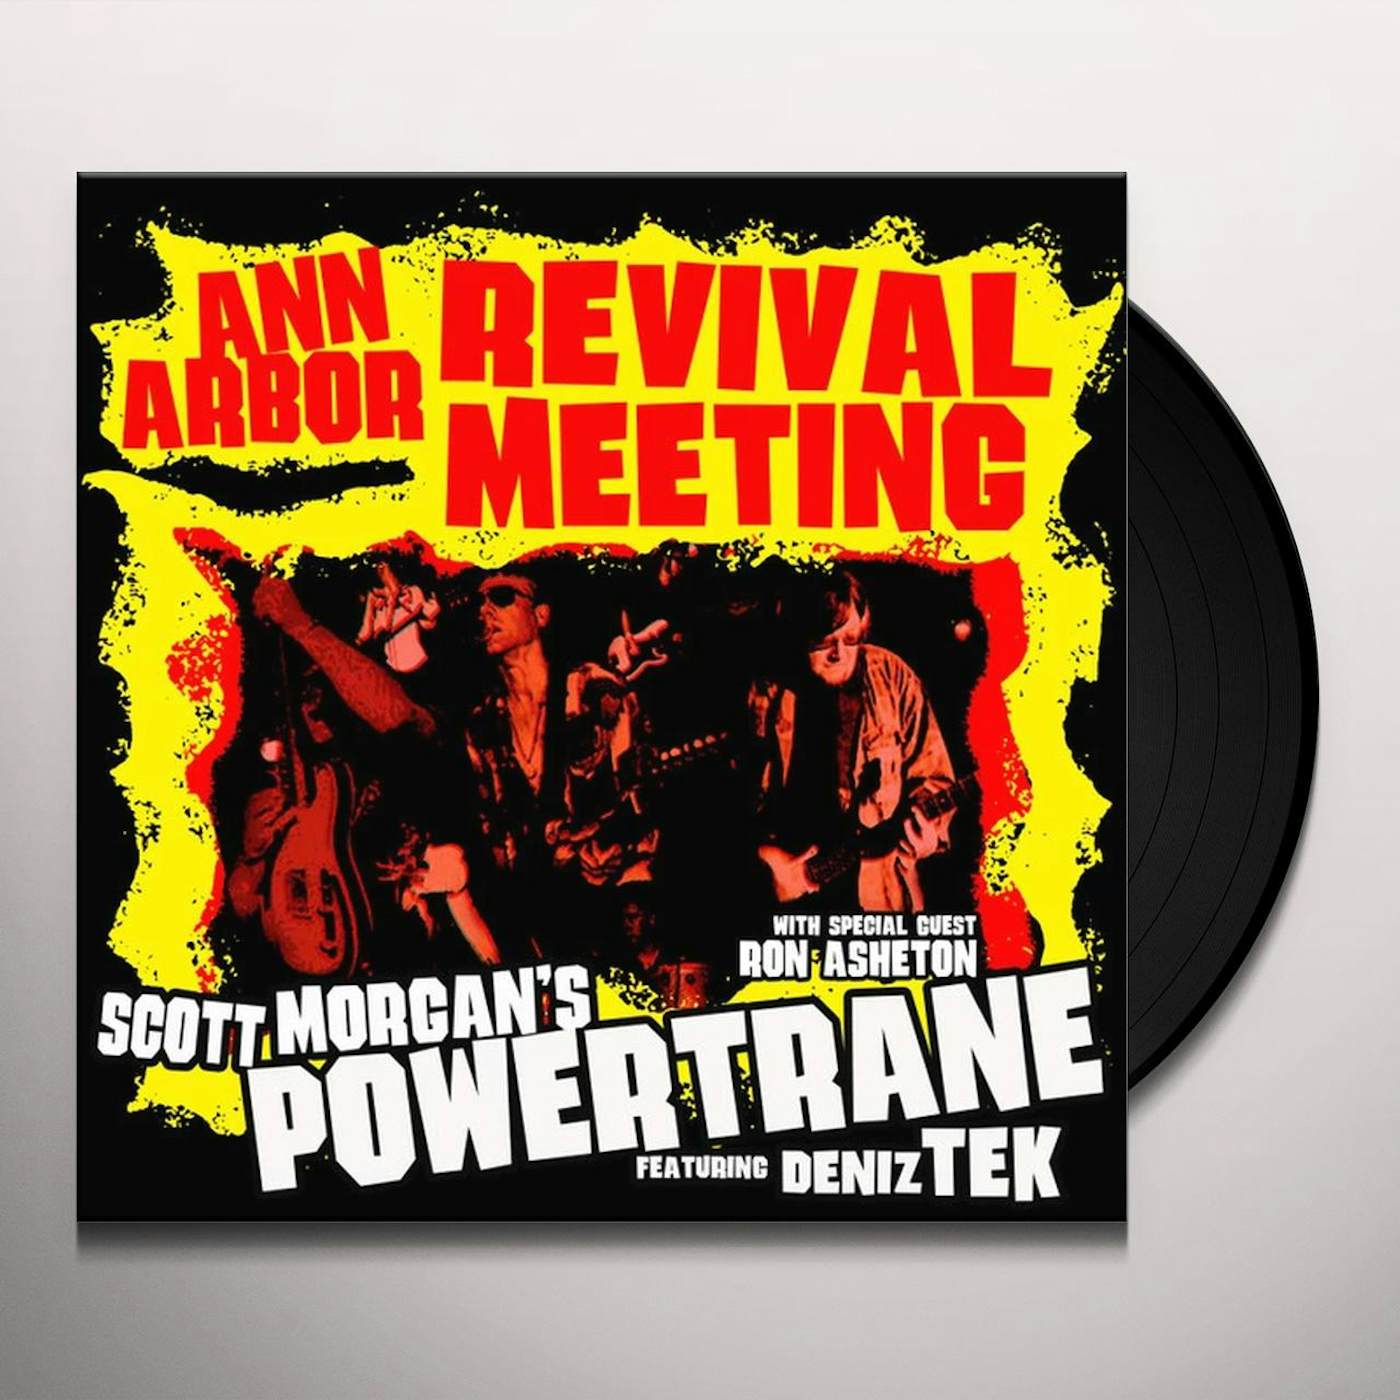 Scott Morgan / Powertrane ANN ARBOR REVIVAL MEETING Vinyl Record